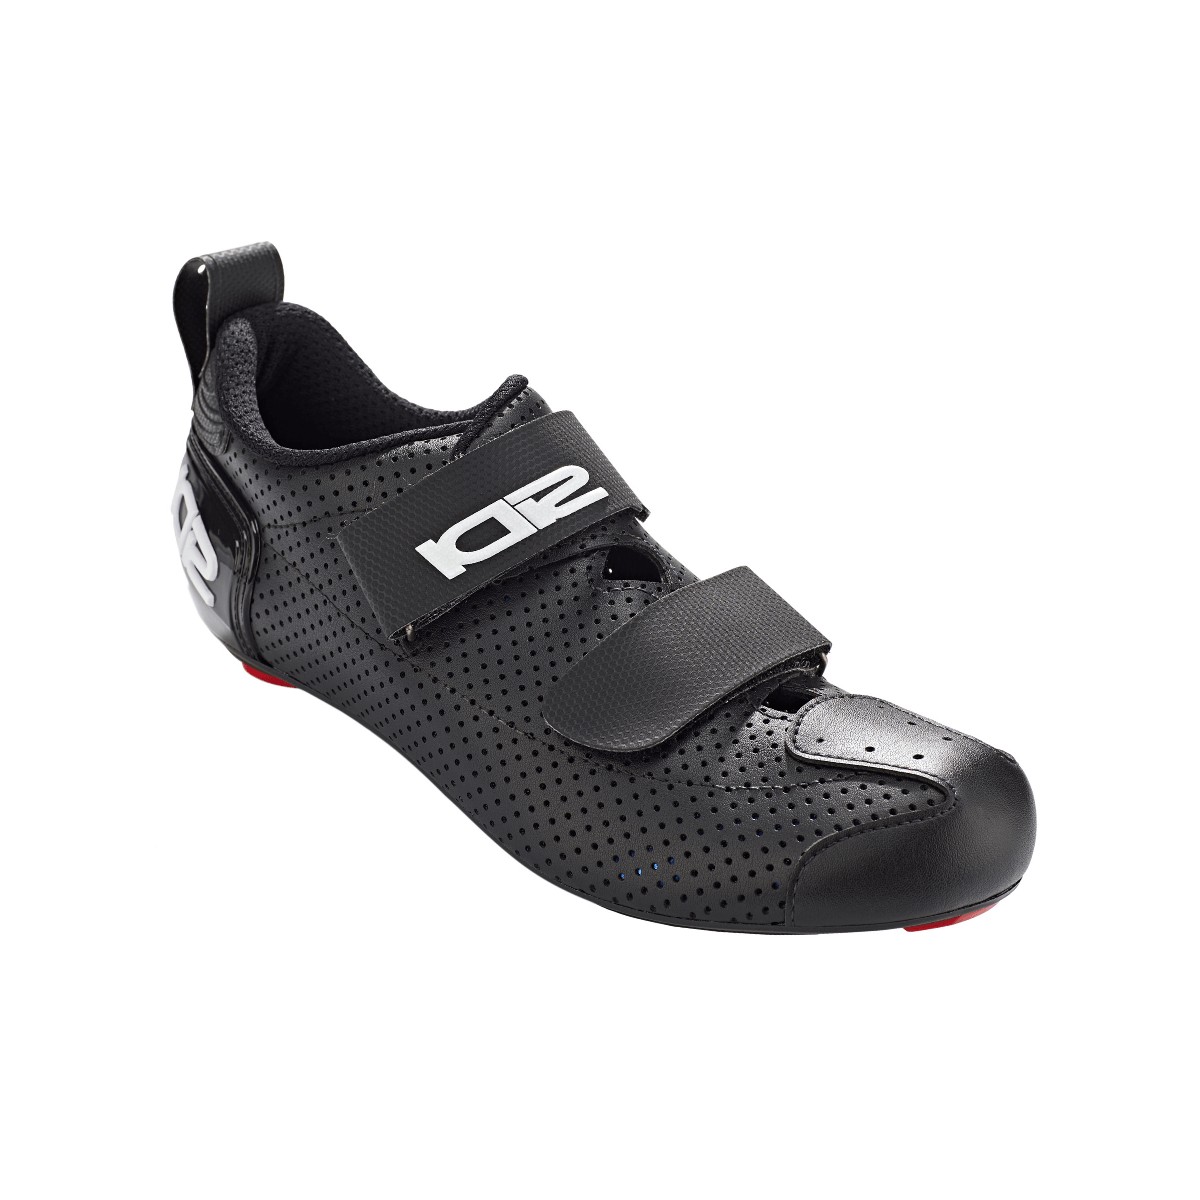 Sidi T5 Air Carbon Black White Triathlon Shoes, Size 41 - EUR